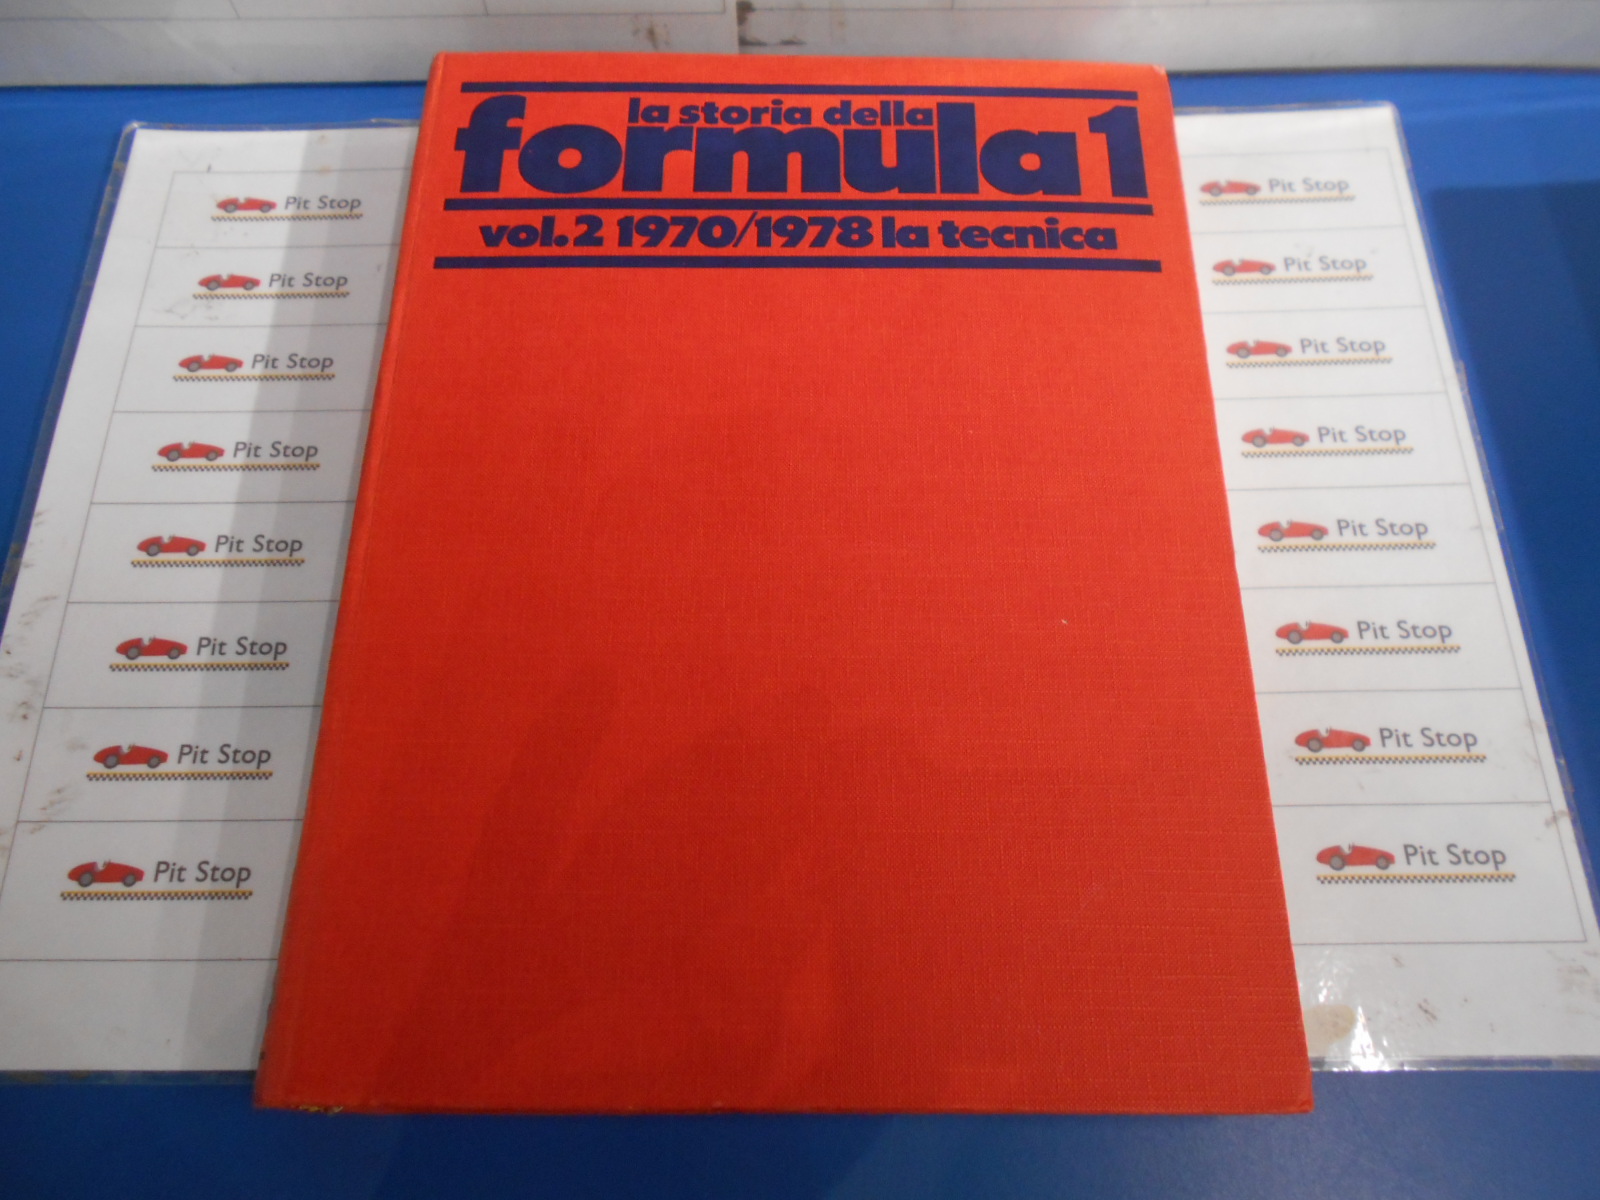 Libro La storia della Formula 1 1970/1978 Vol. 2 la tecnica